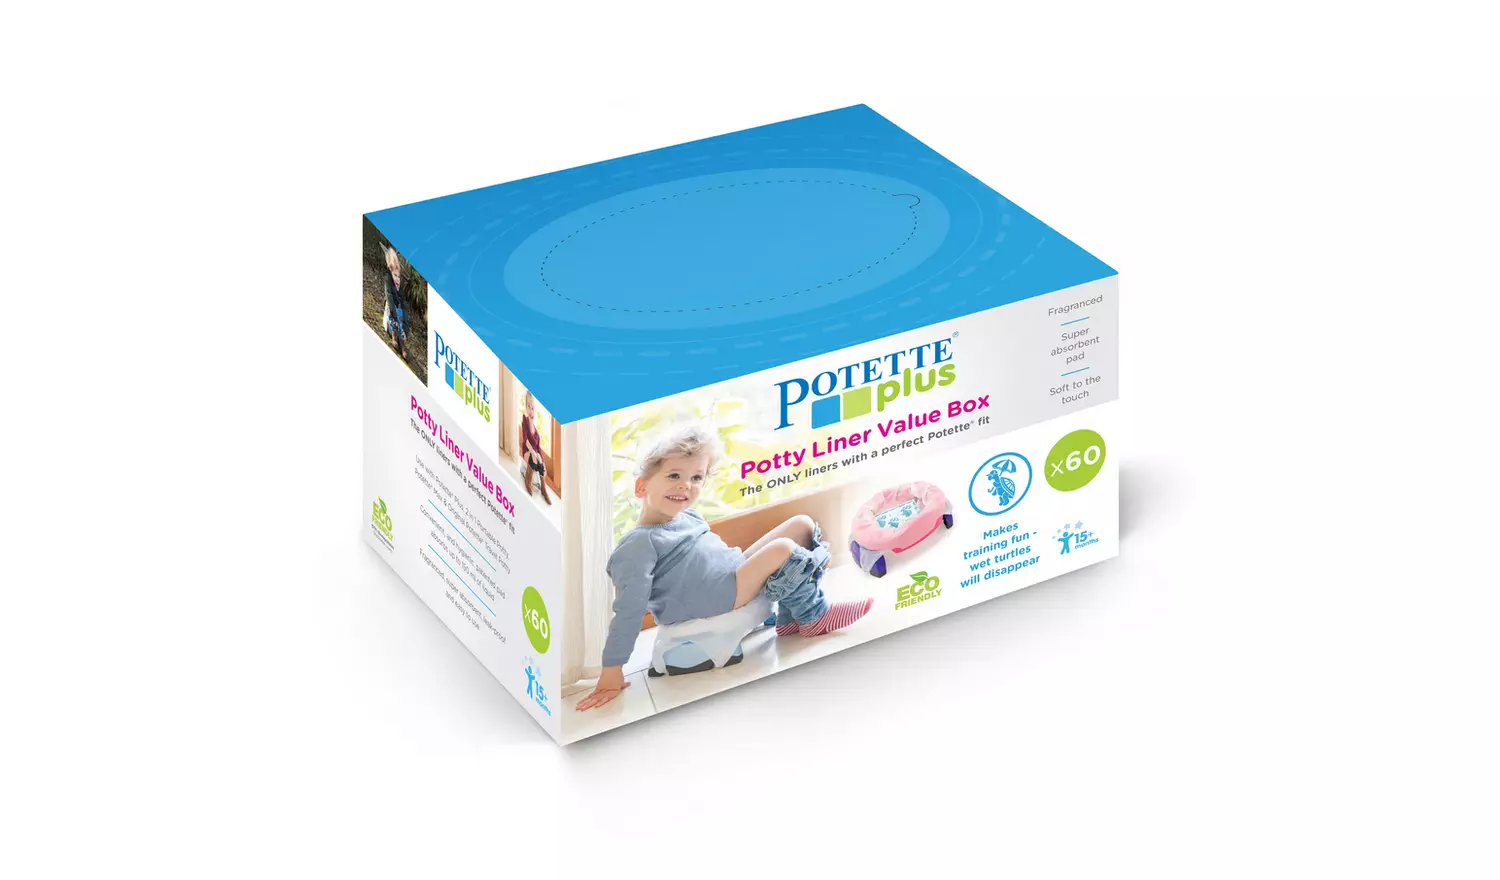 Potette Plus Potty Liners – 60 Pack